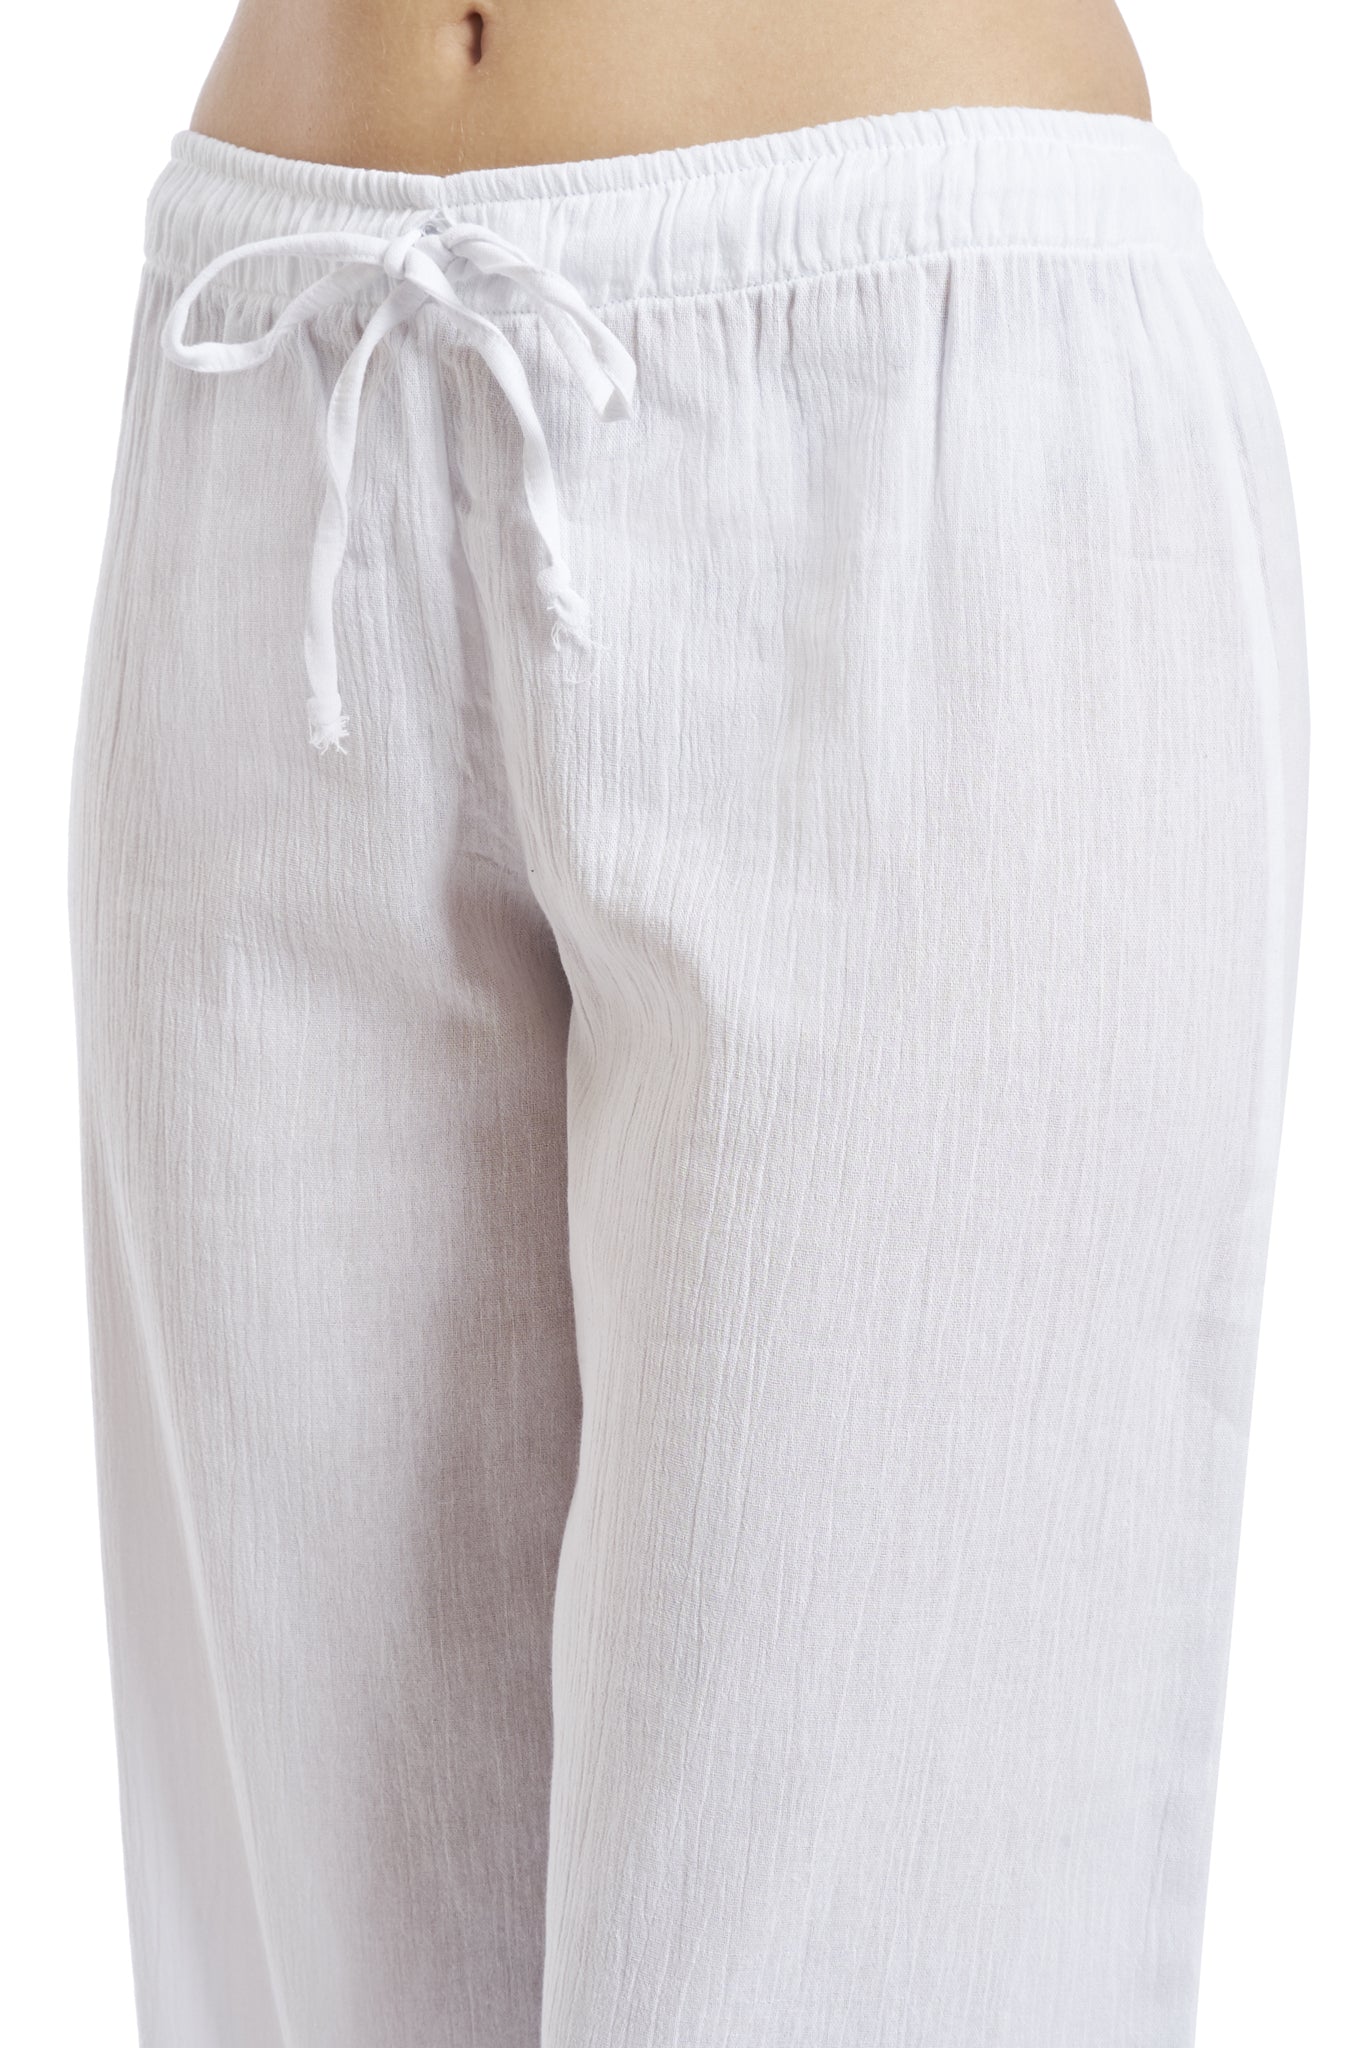 Women's Gauze Cotton Beach and PJ Pants (White)